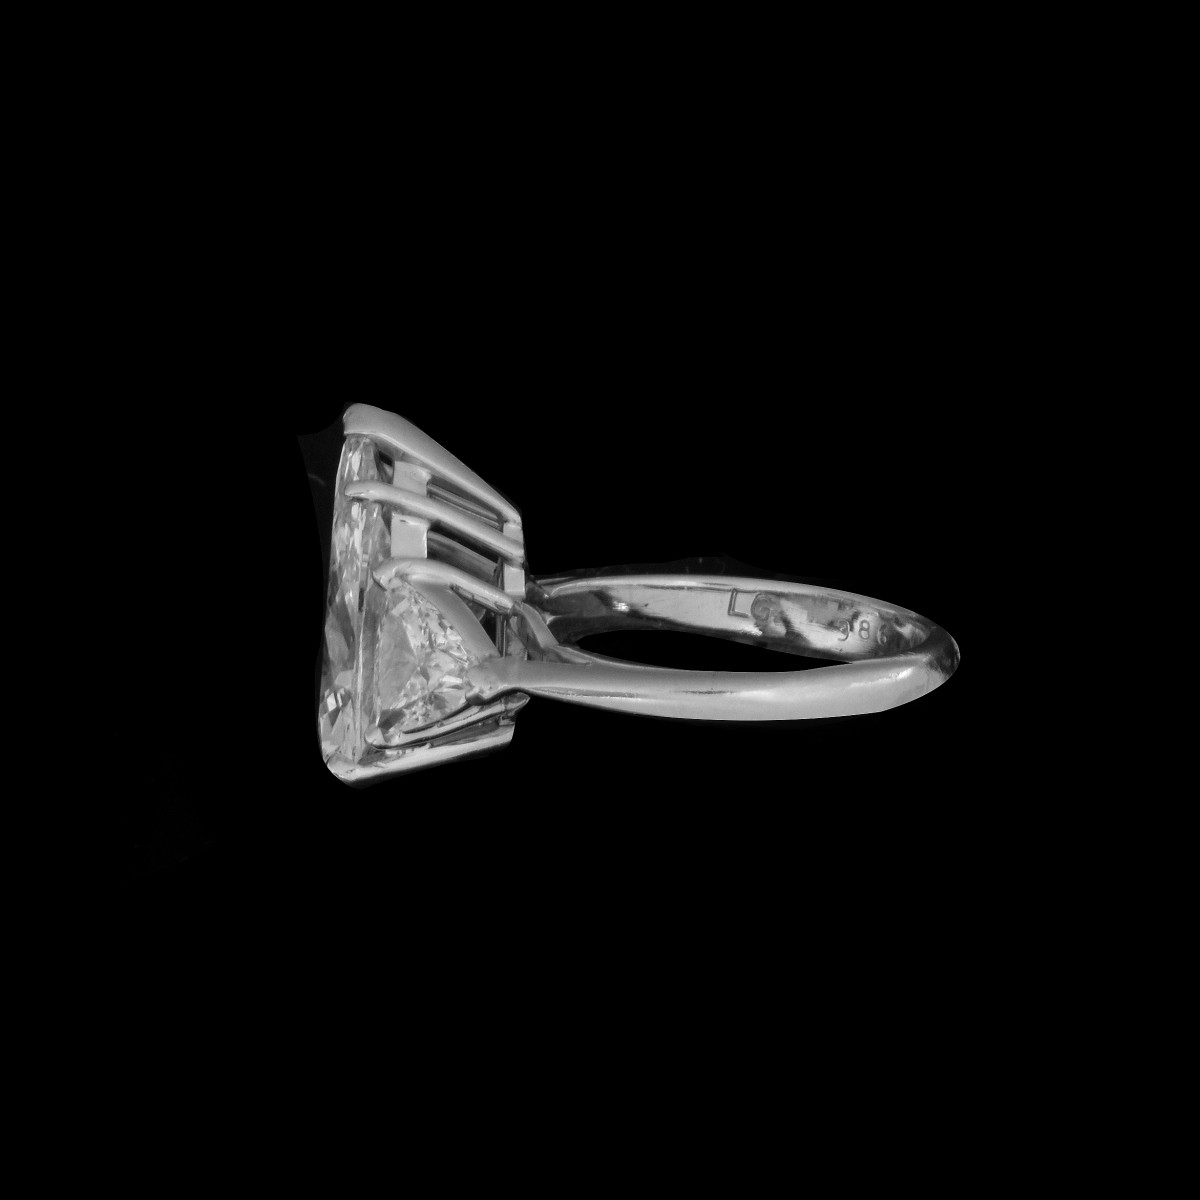 5.36ct TW Diamond and Platinum Ring